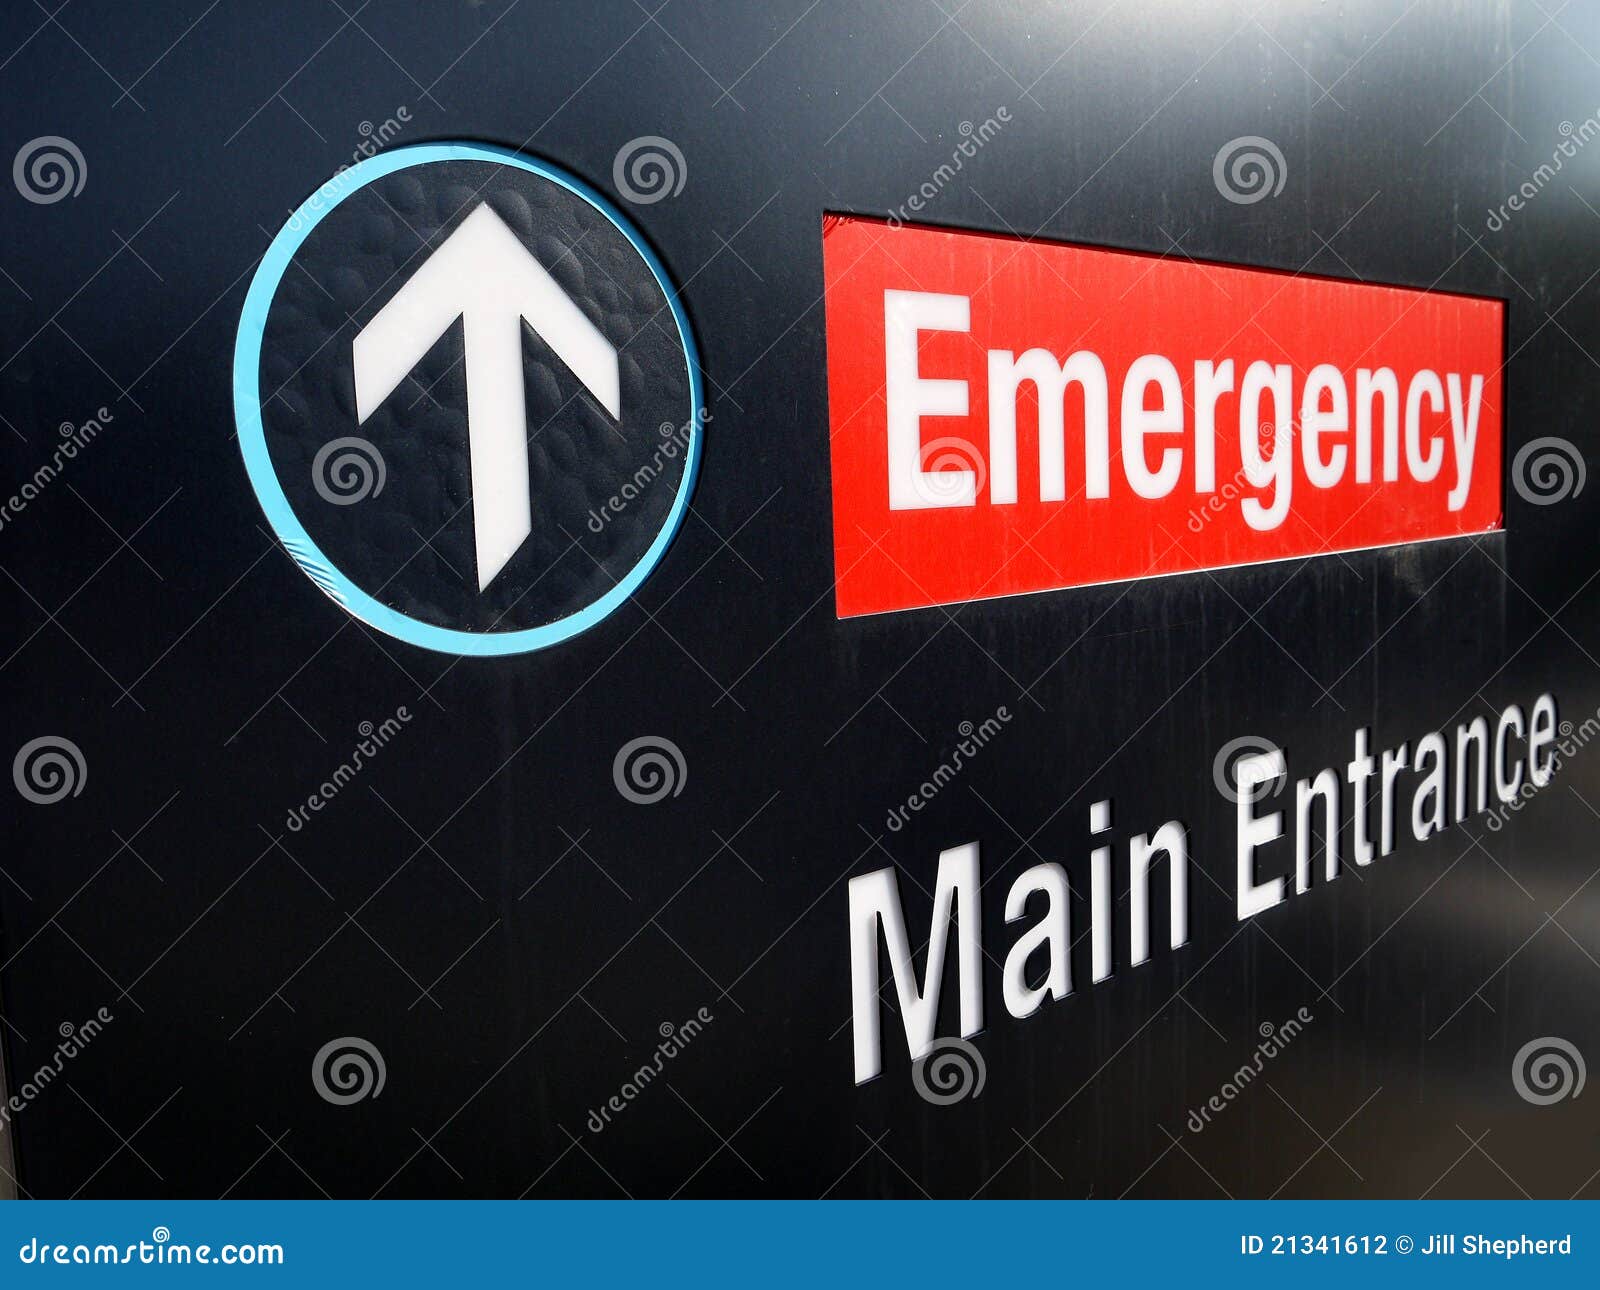 hospital: emergency sign